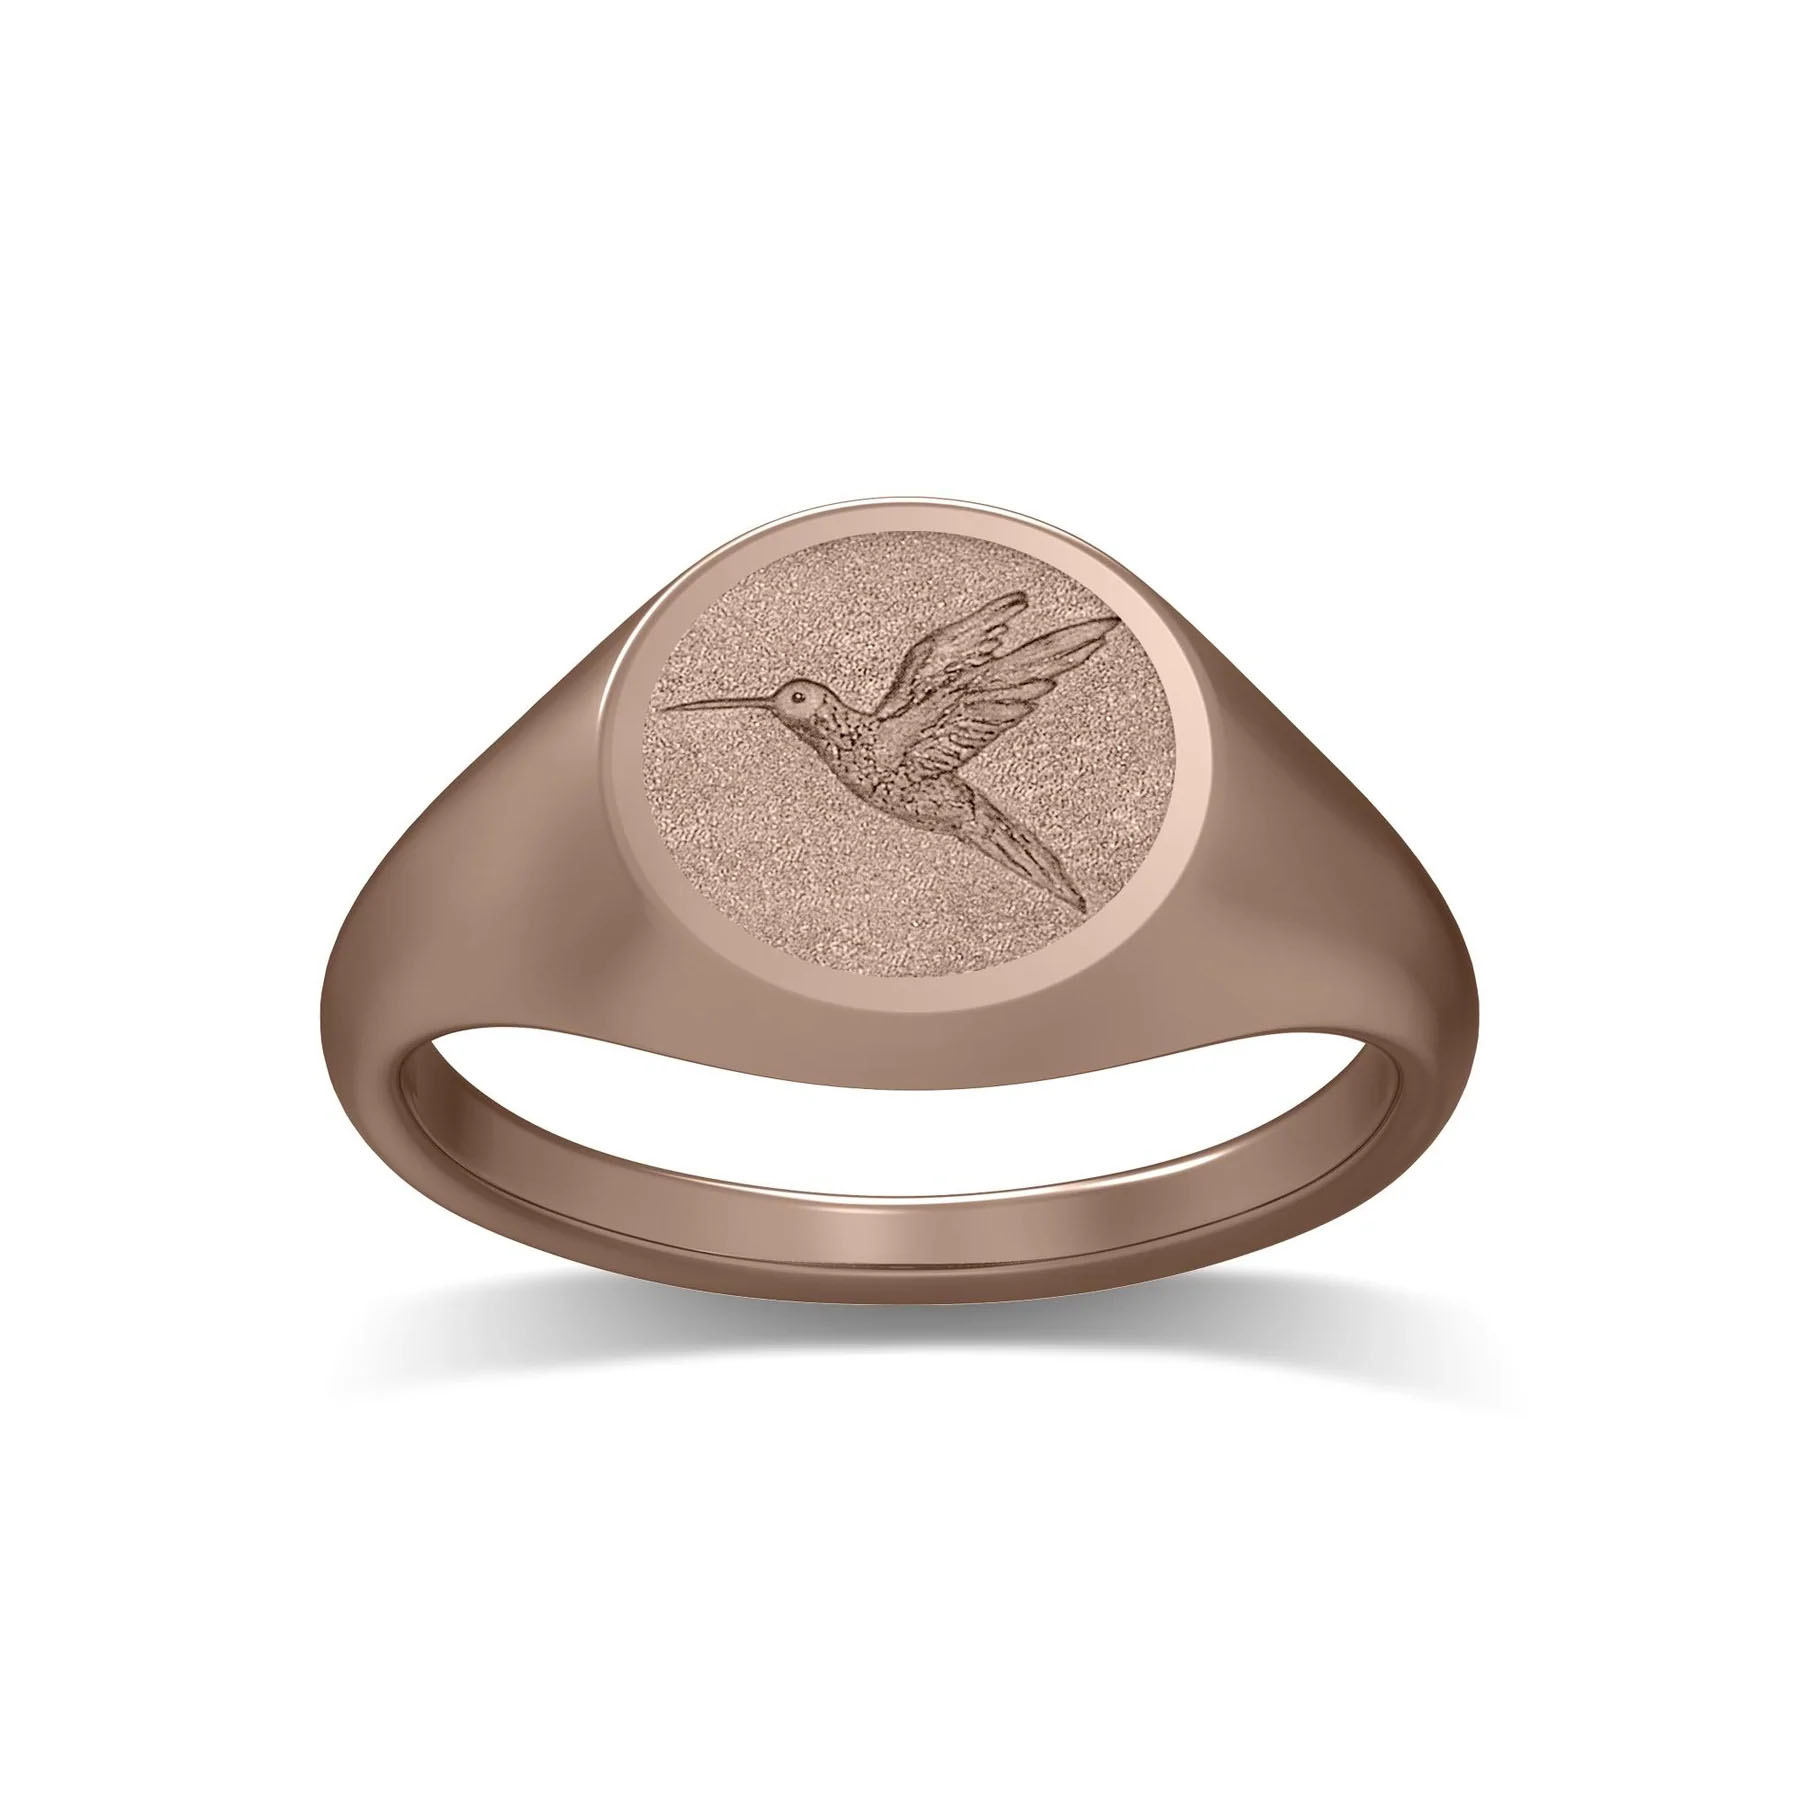 The Woodstar - Customizable Signet Ring